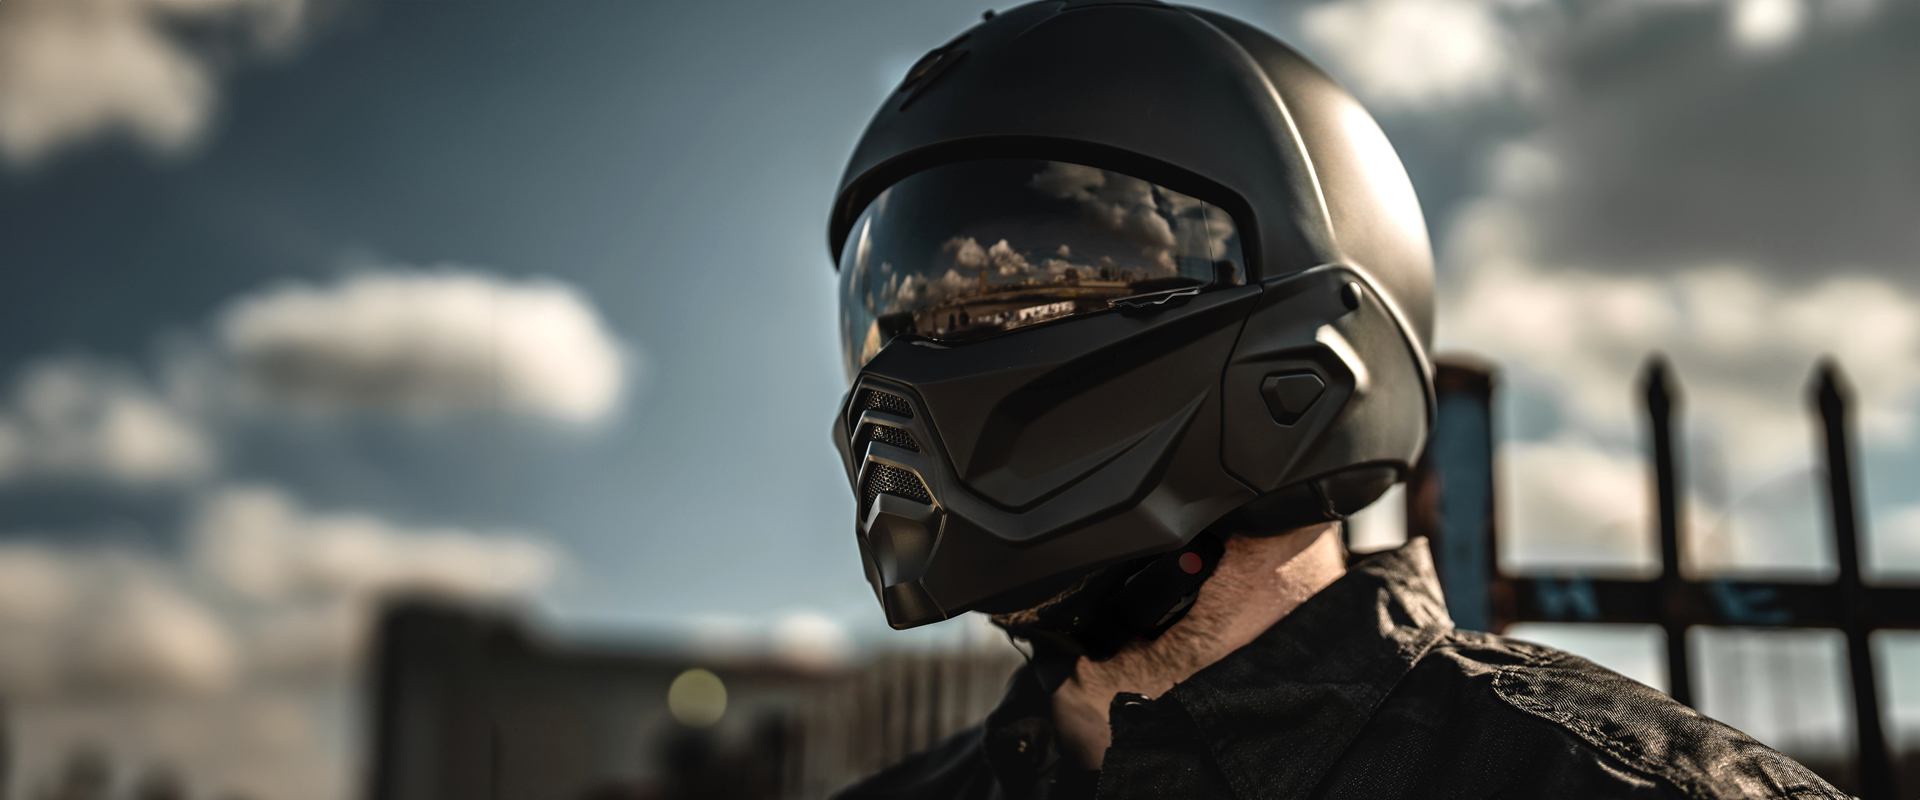 ScorpionExo : Premium Motorcycle Helmets and Riding Gear